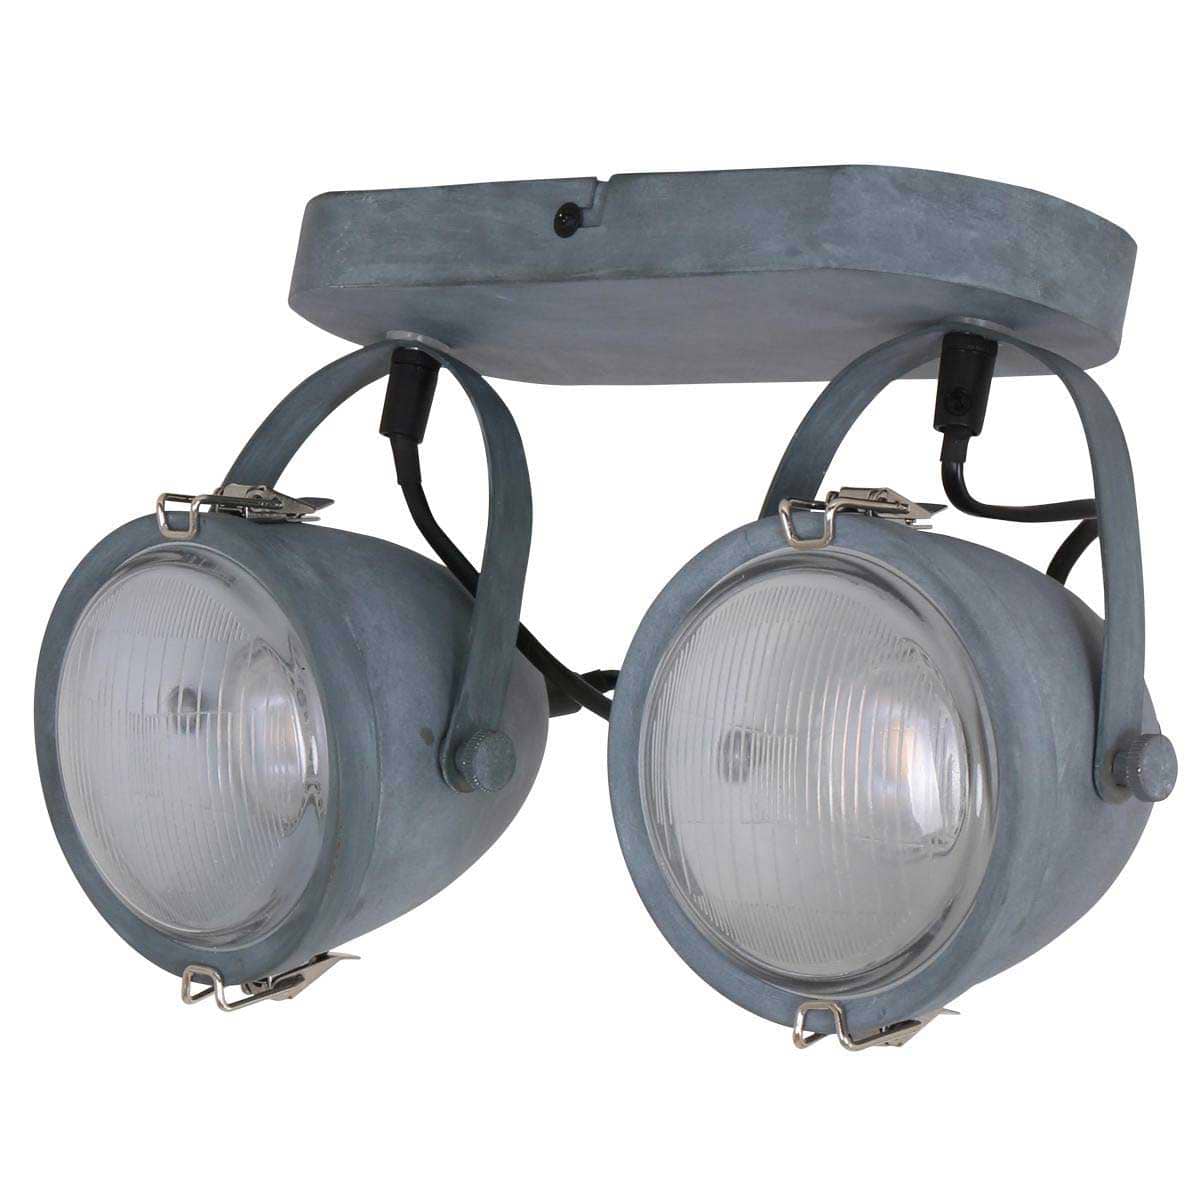 Onderscheiden Merg Delegatie Industriële plafondlamp 2-lichts spot, grijs, Paco, MEXLITE, 1312GR,  industrielamp, industriële plafondlamp, plafondspots, plafondlamp,  landelijk, industrieel, Mexlite - 1312GR - Webo Verlichting